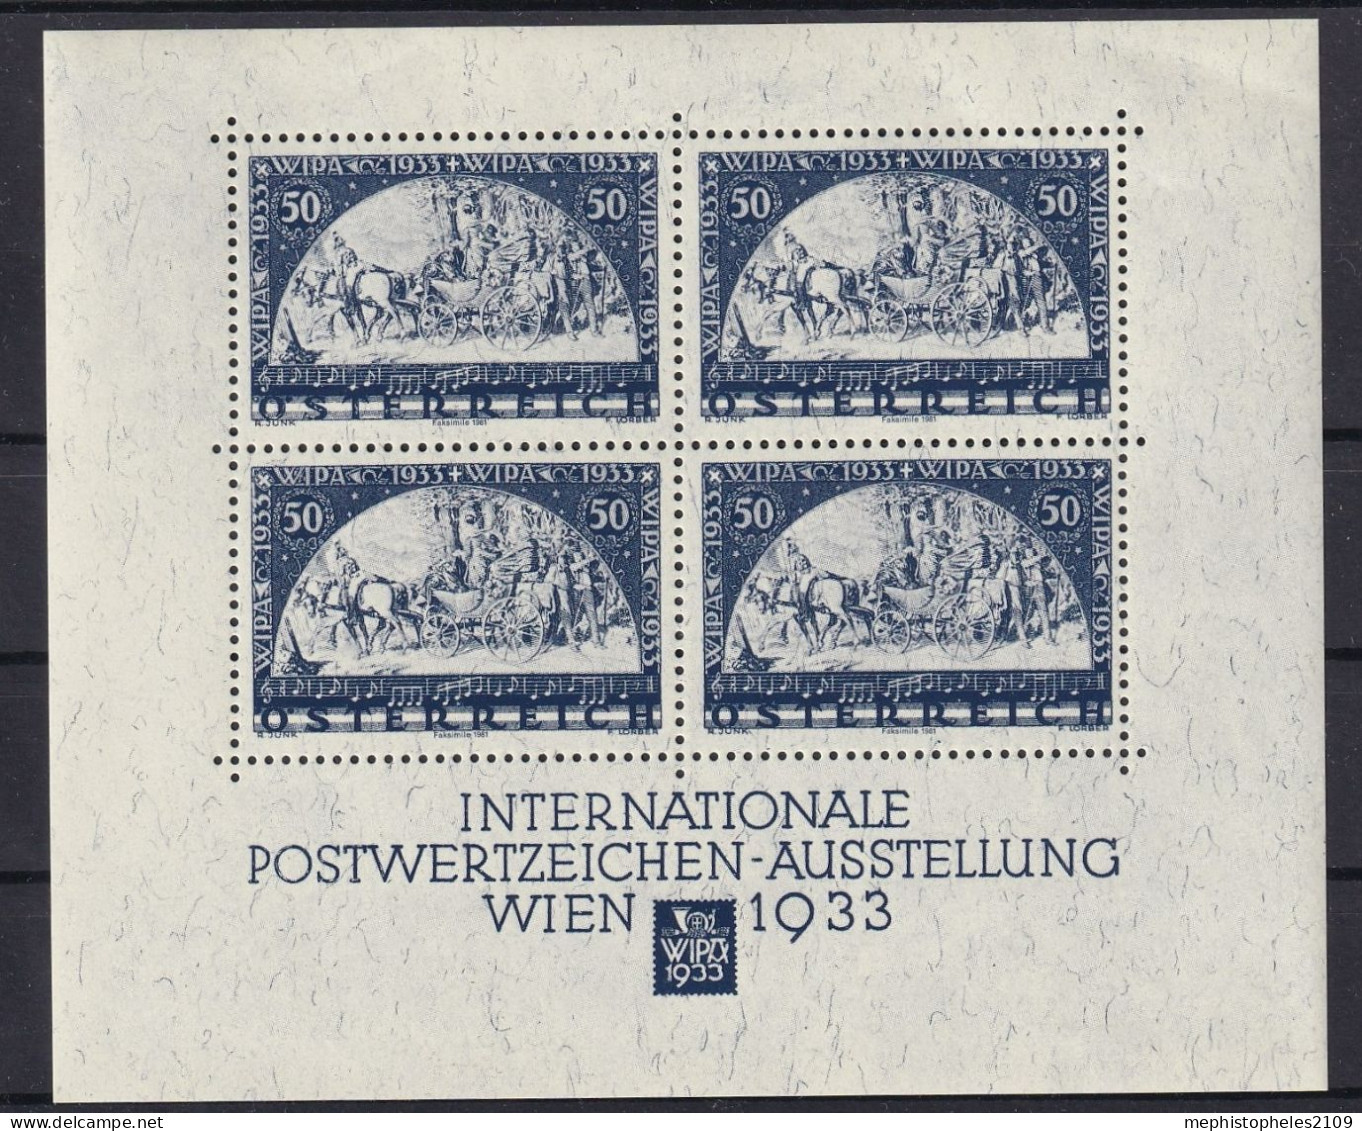 AUSTRIA (1933) - MNH - WIPA-Block - FAKSIMILE! - Nuovi